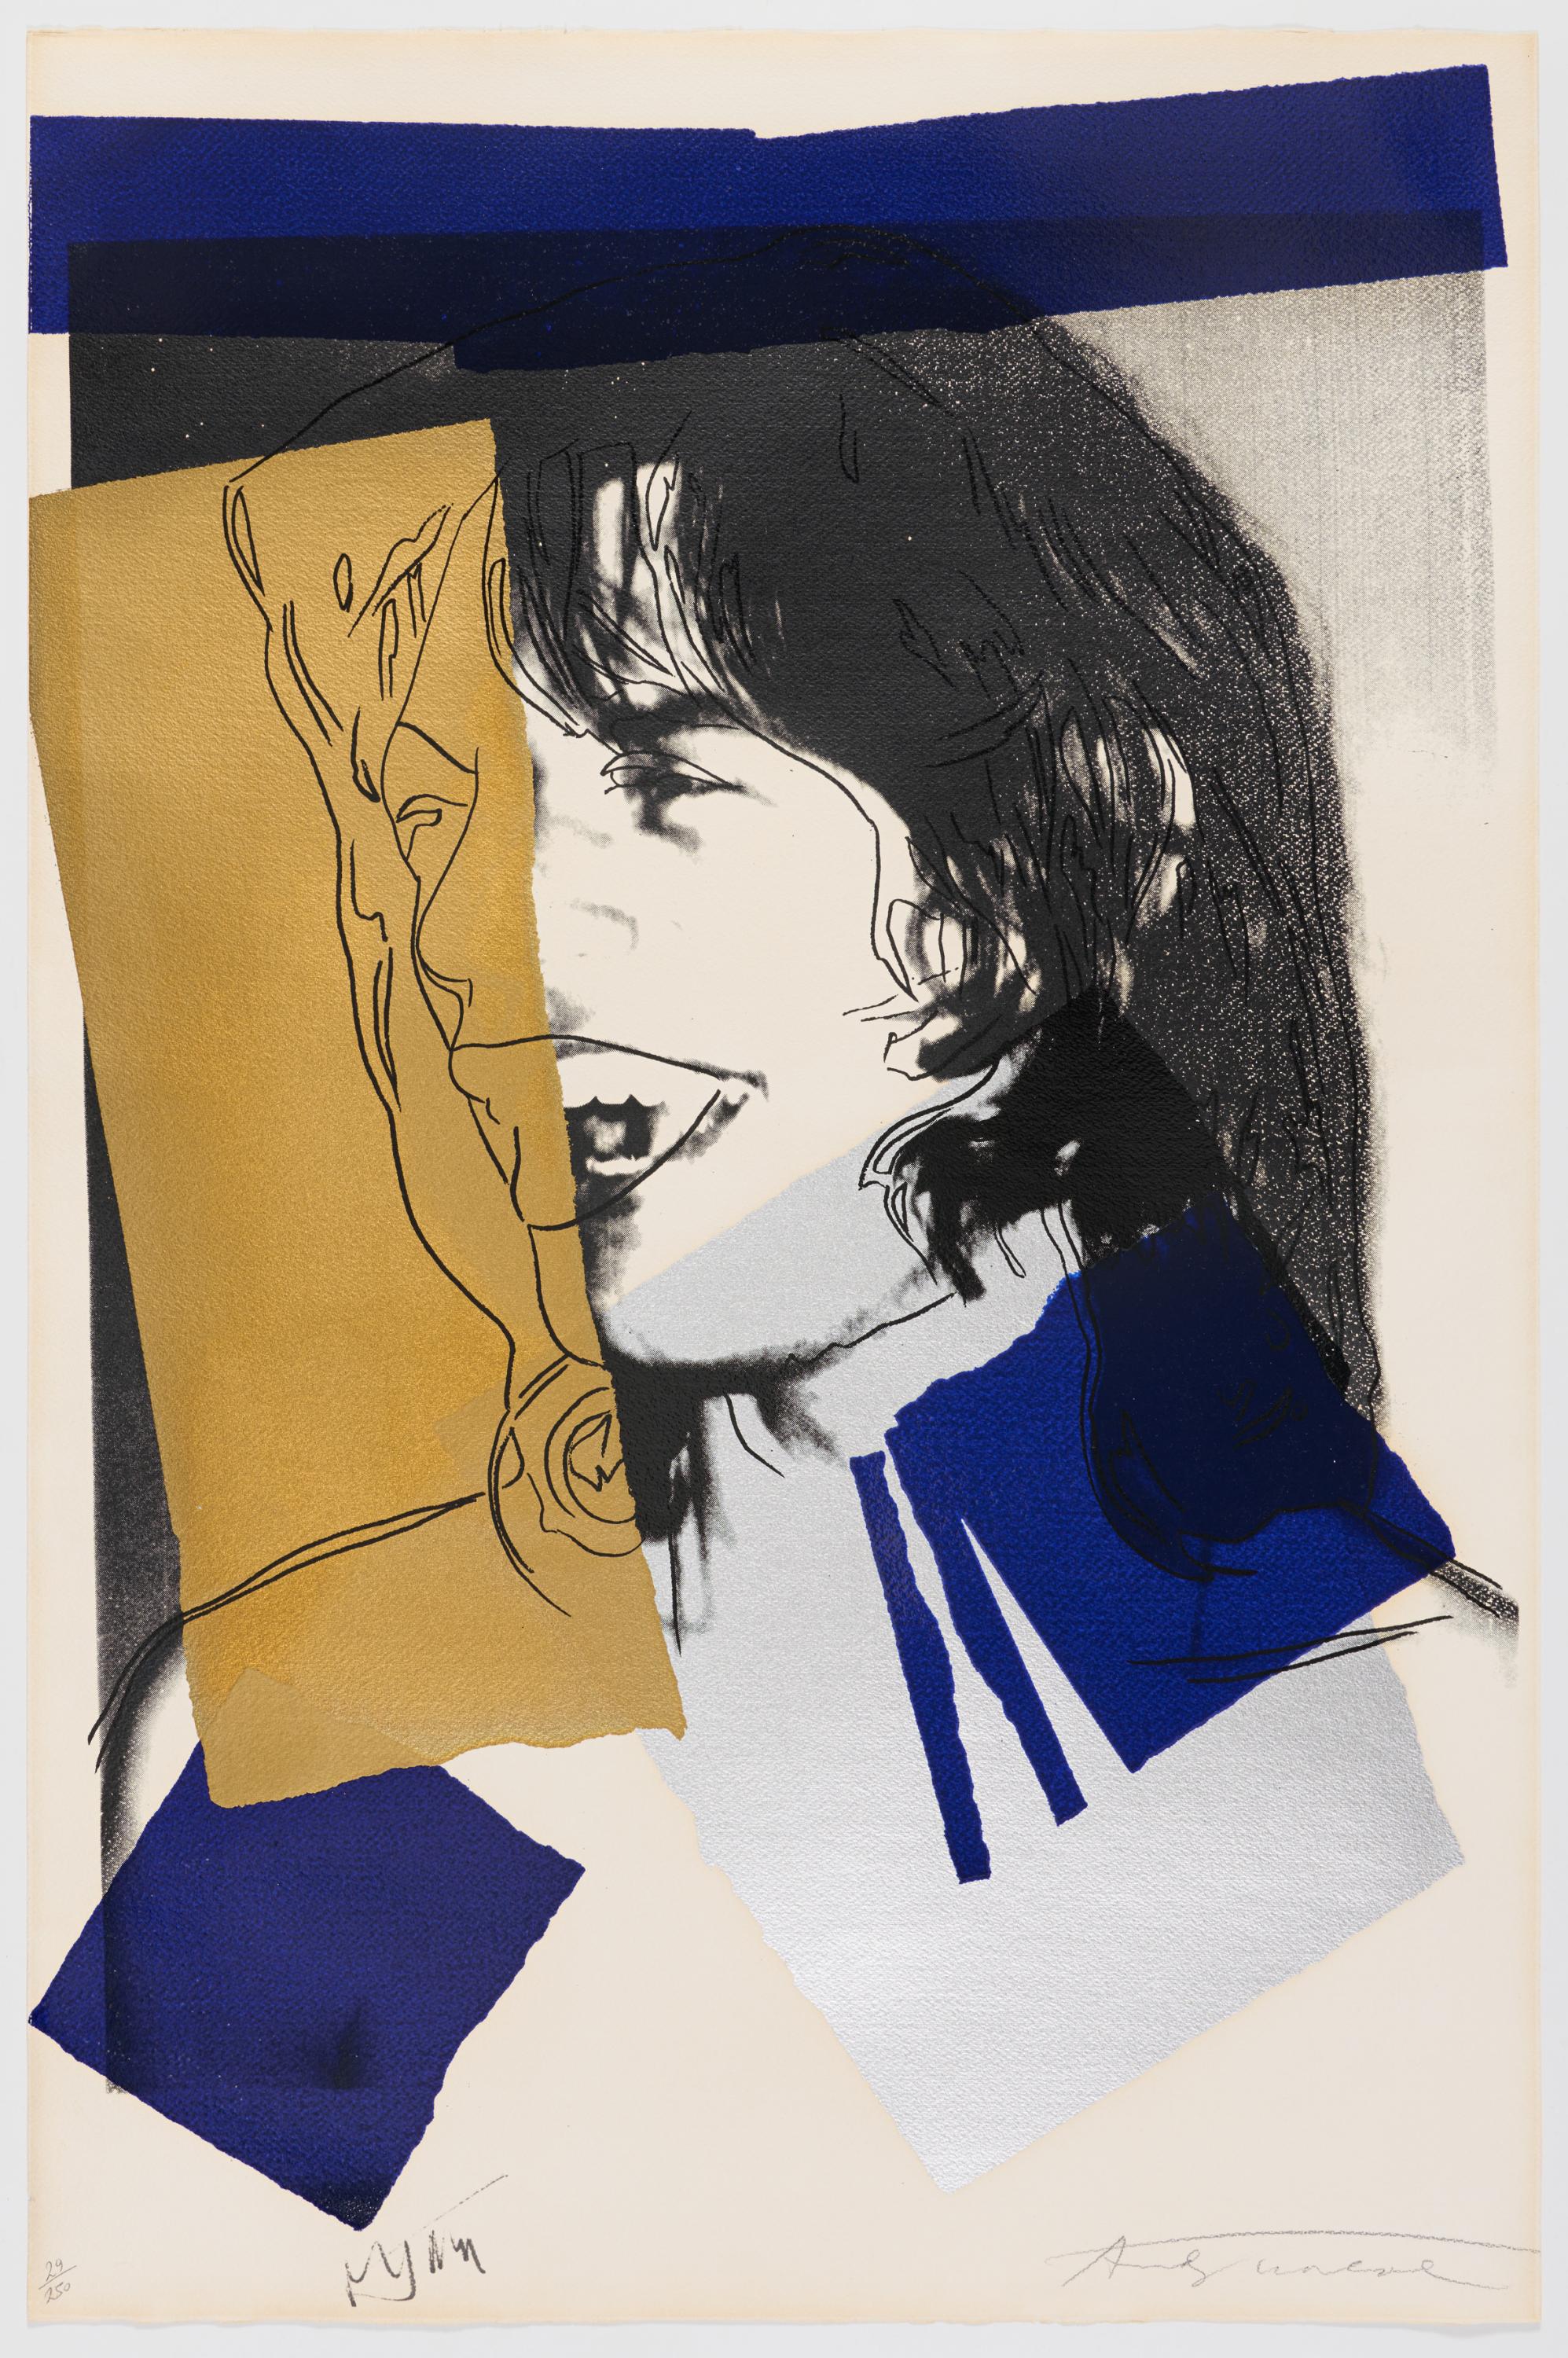 Andy Warhol: Mick Jagger - Image 2 of 4